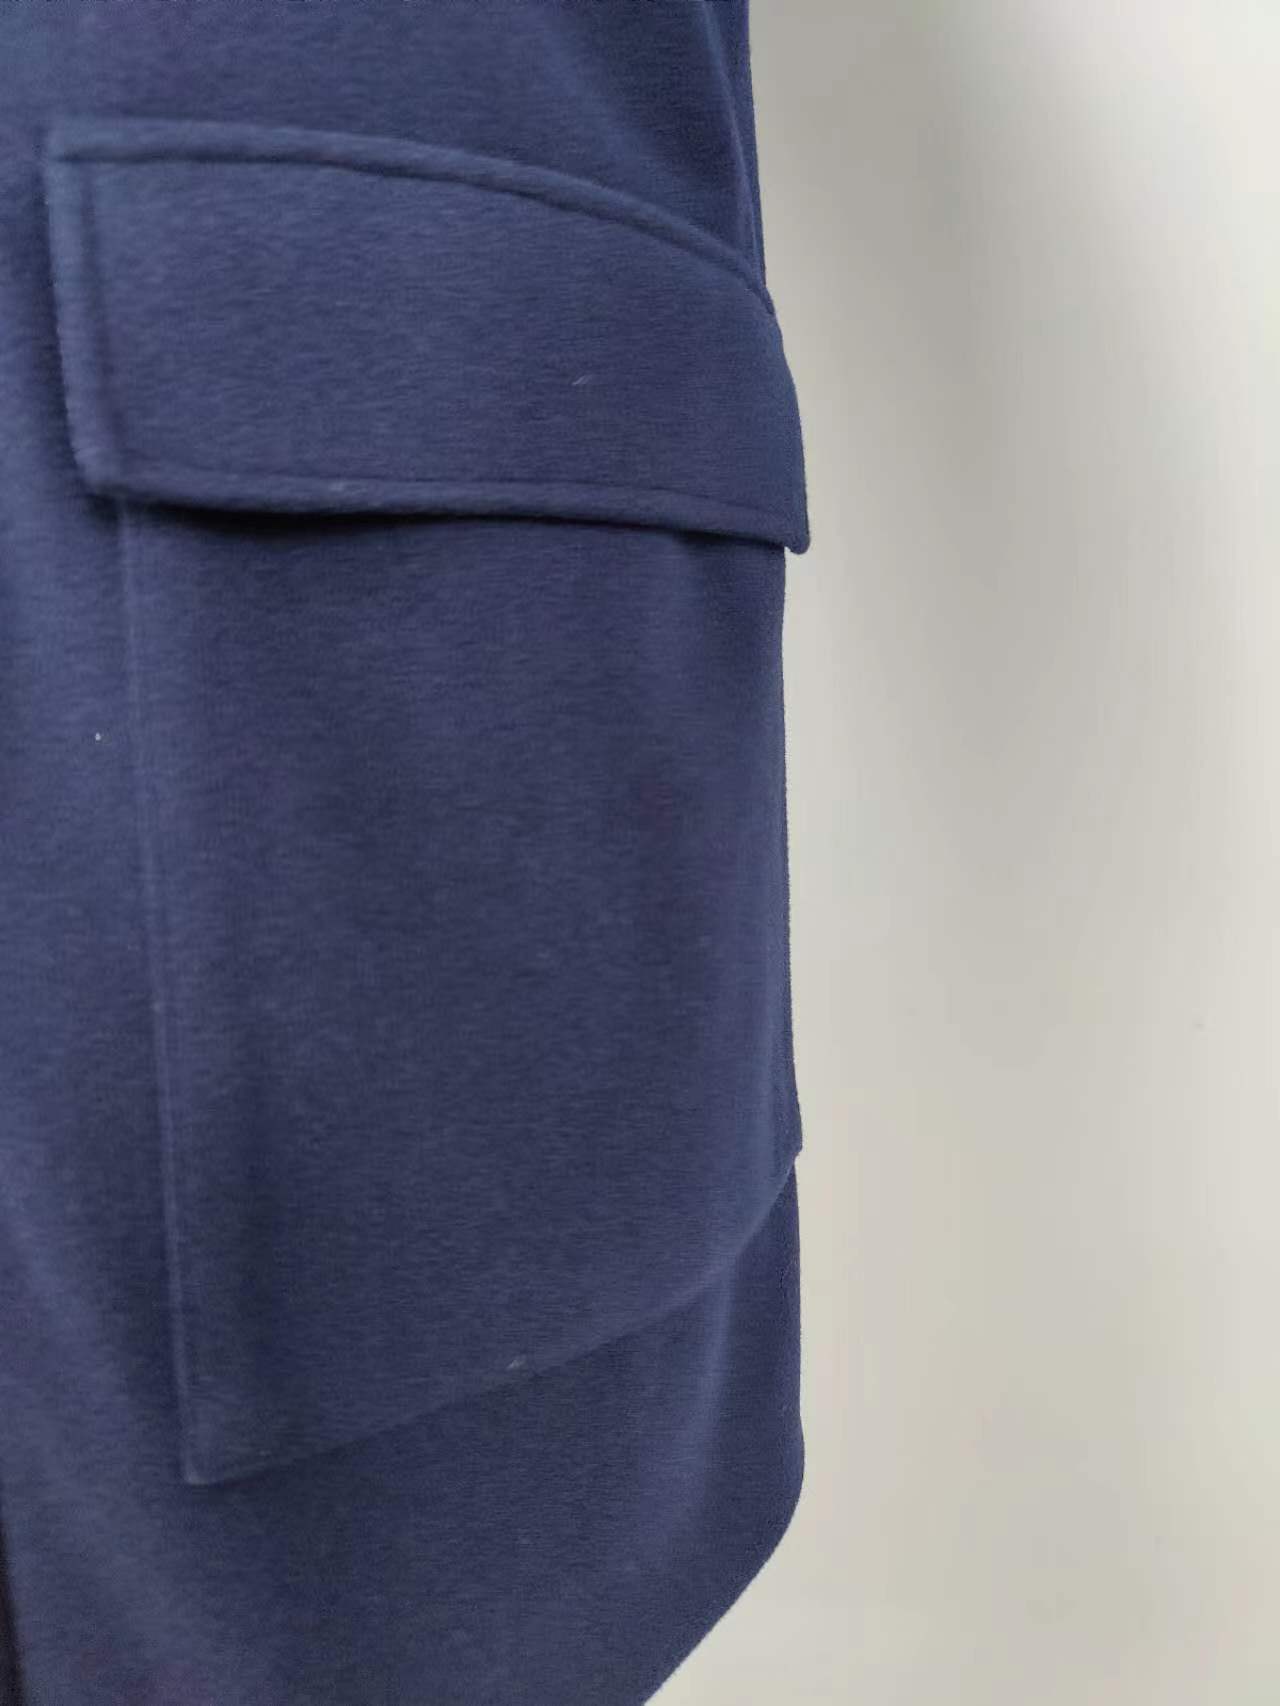 Navy Blue Color Hoody Jacket Long Casual Style Men Coat